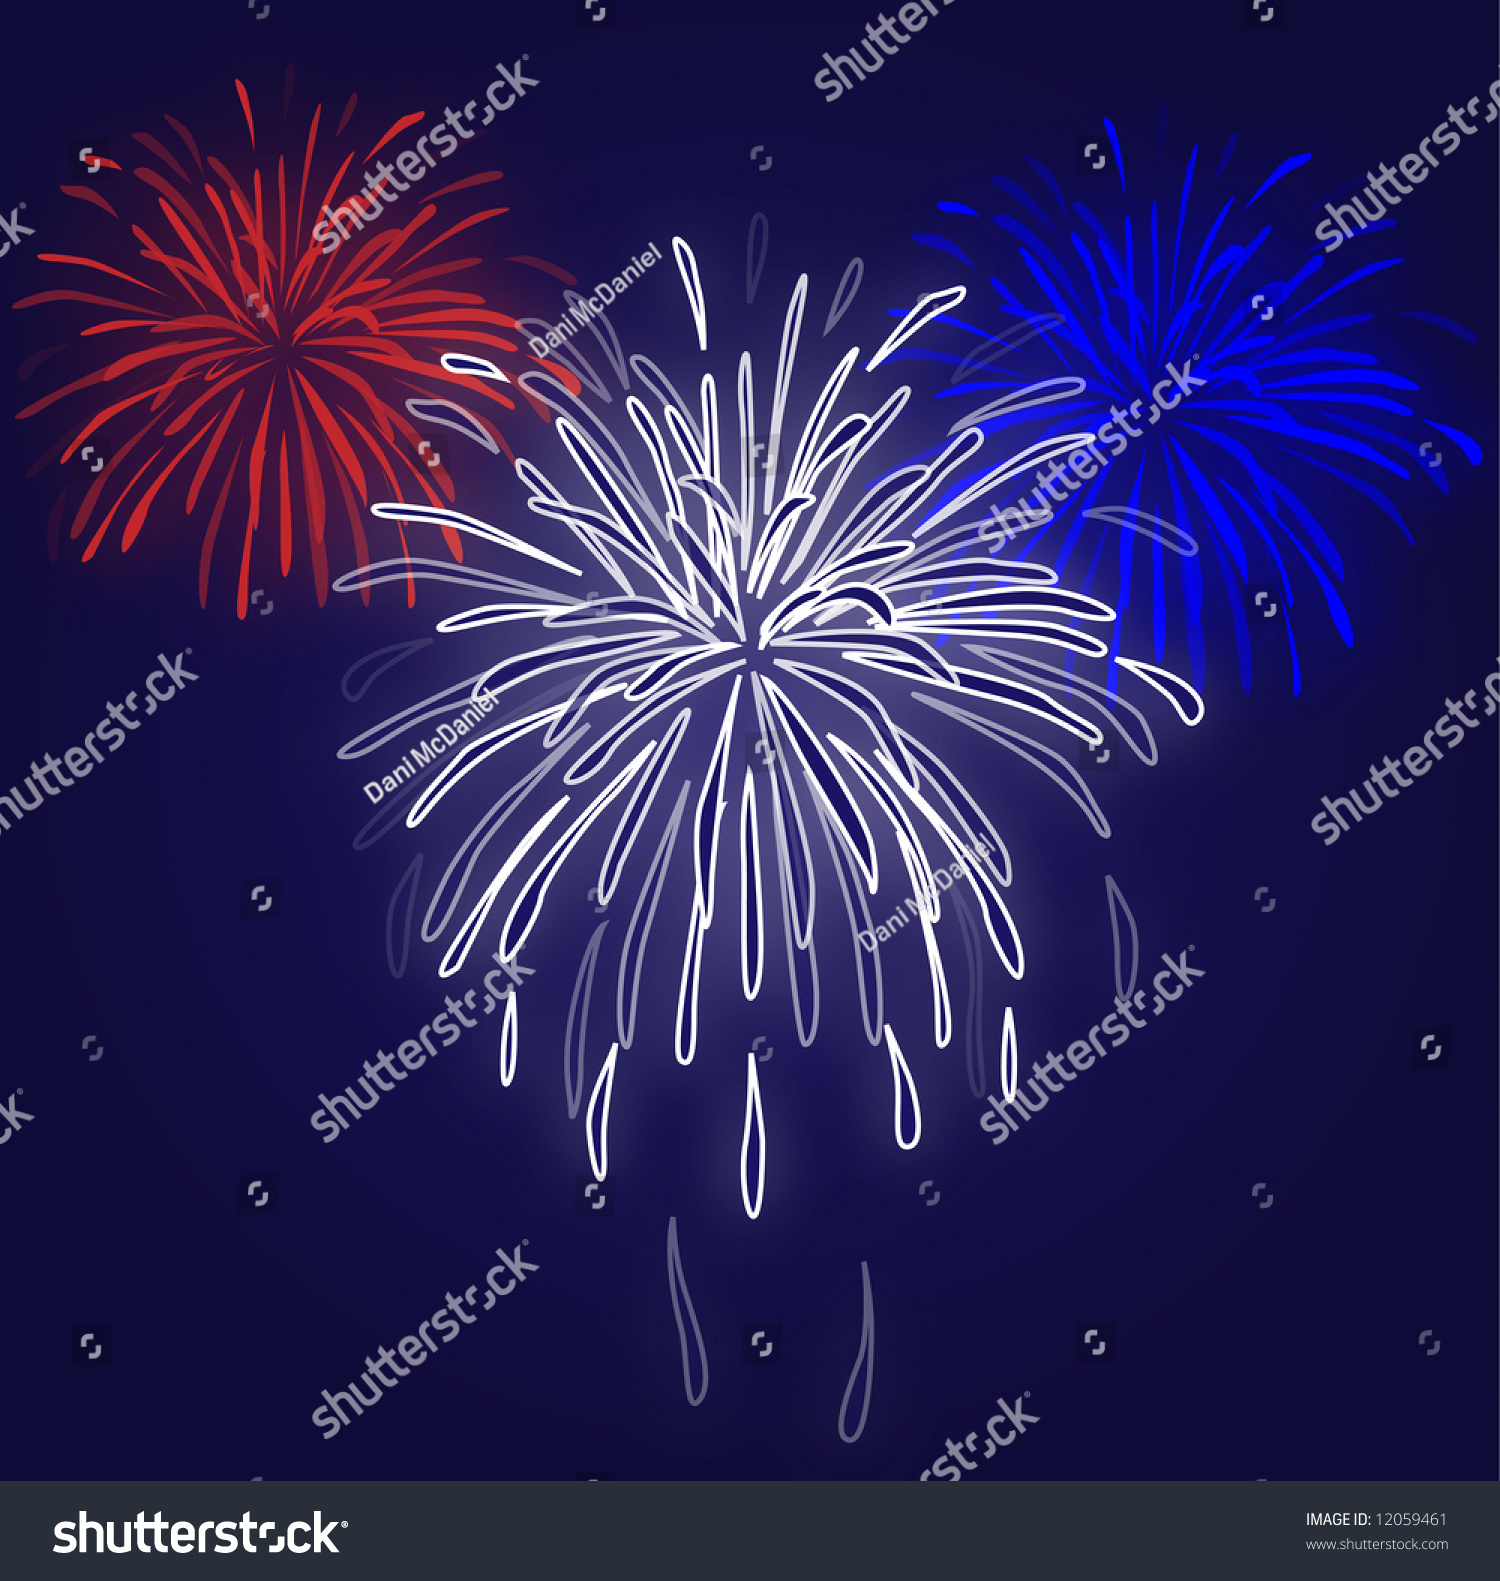 Graphic Illustration Red White Blue Fireworks Stock ...